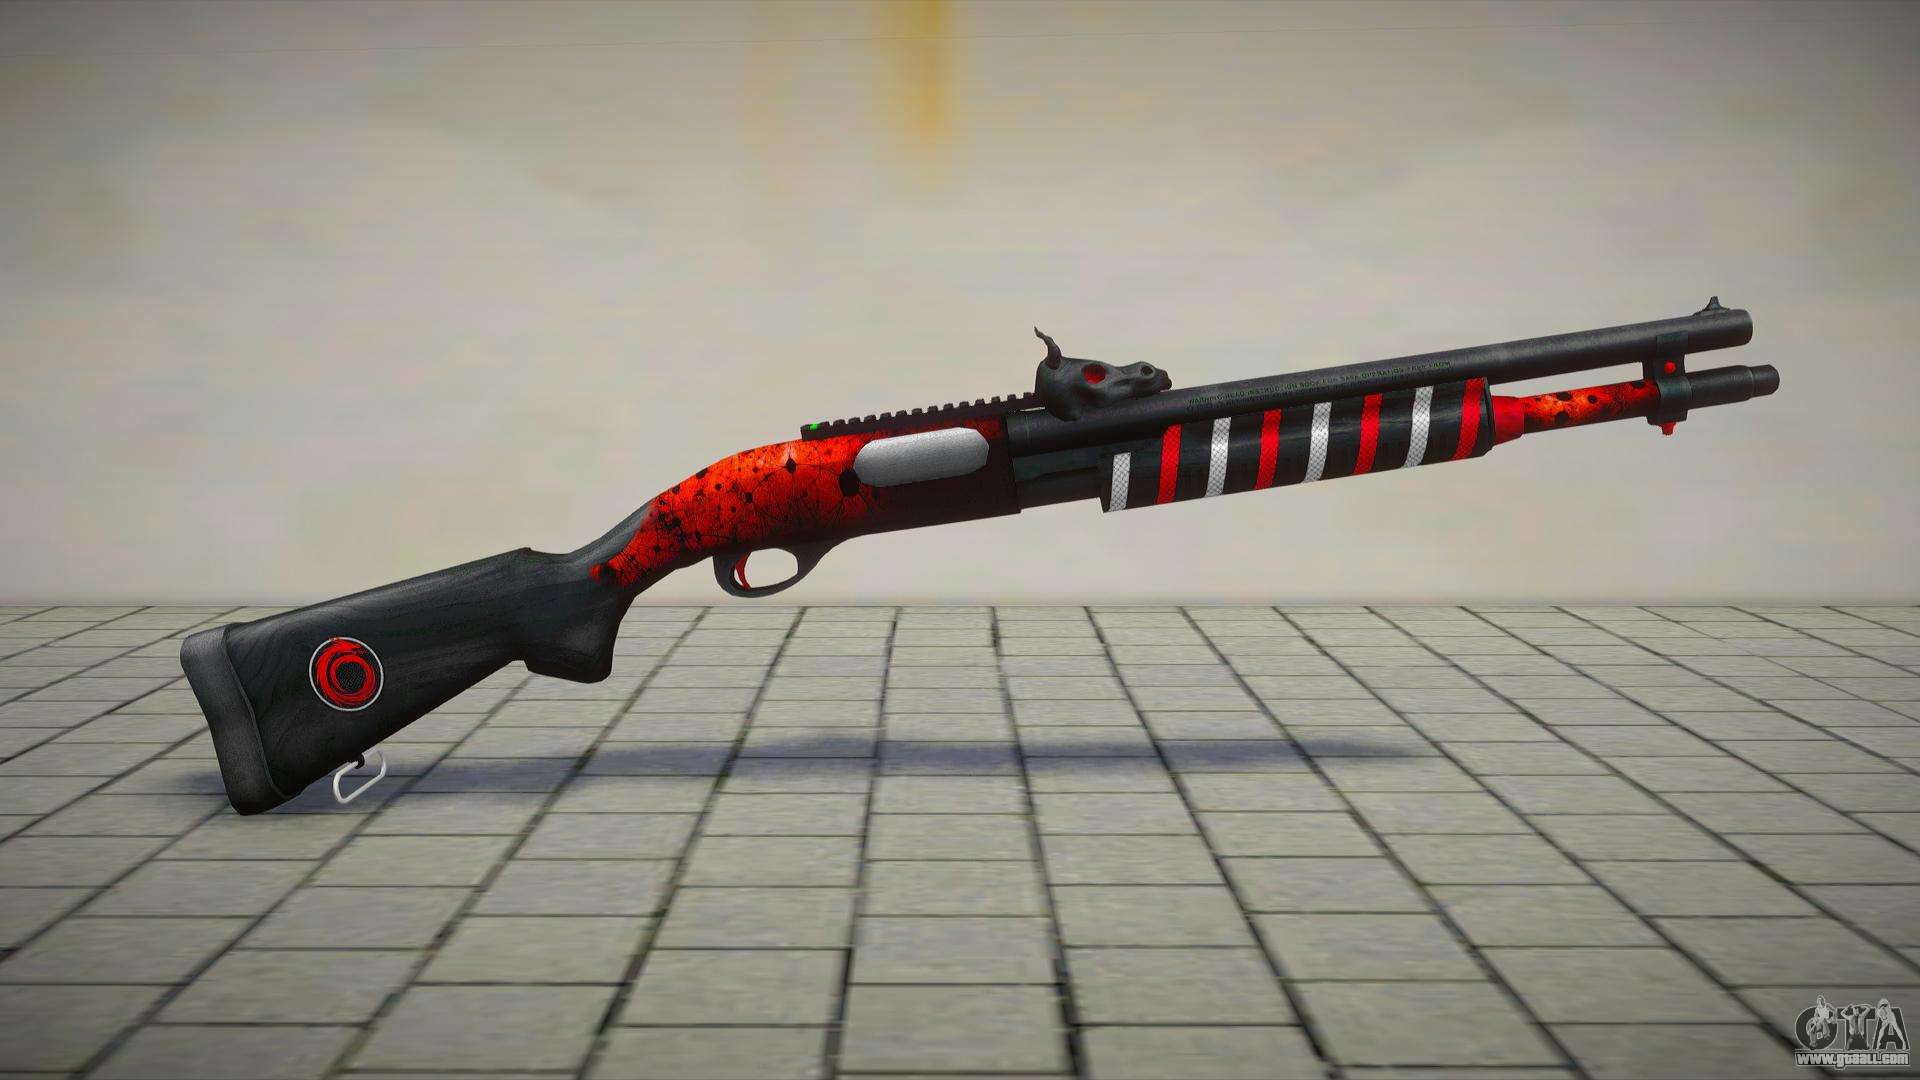 Red Chromegun Toxic Dragon by sHePard for GTA San Andreas